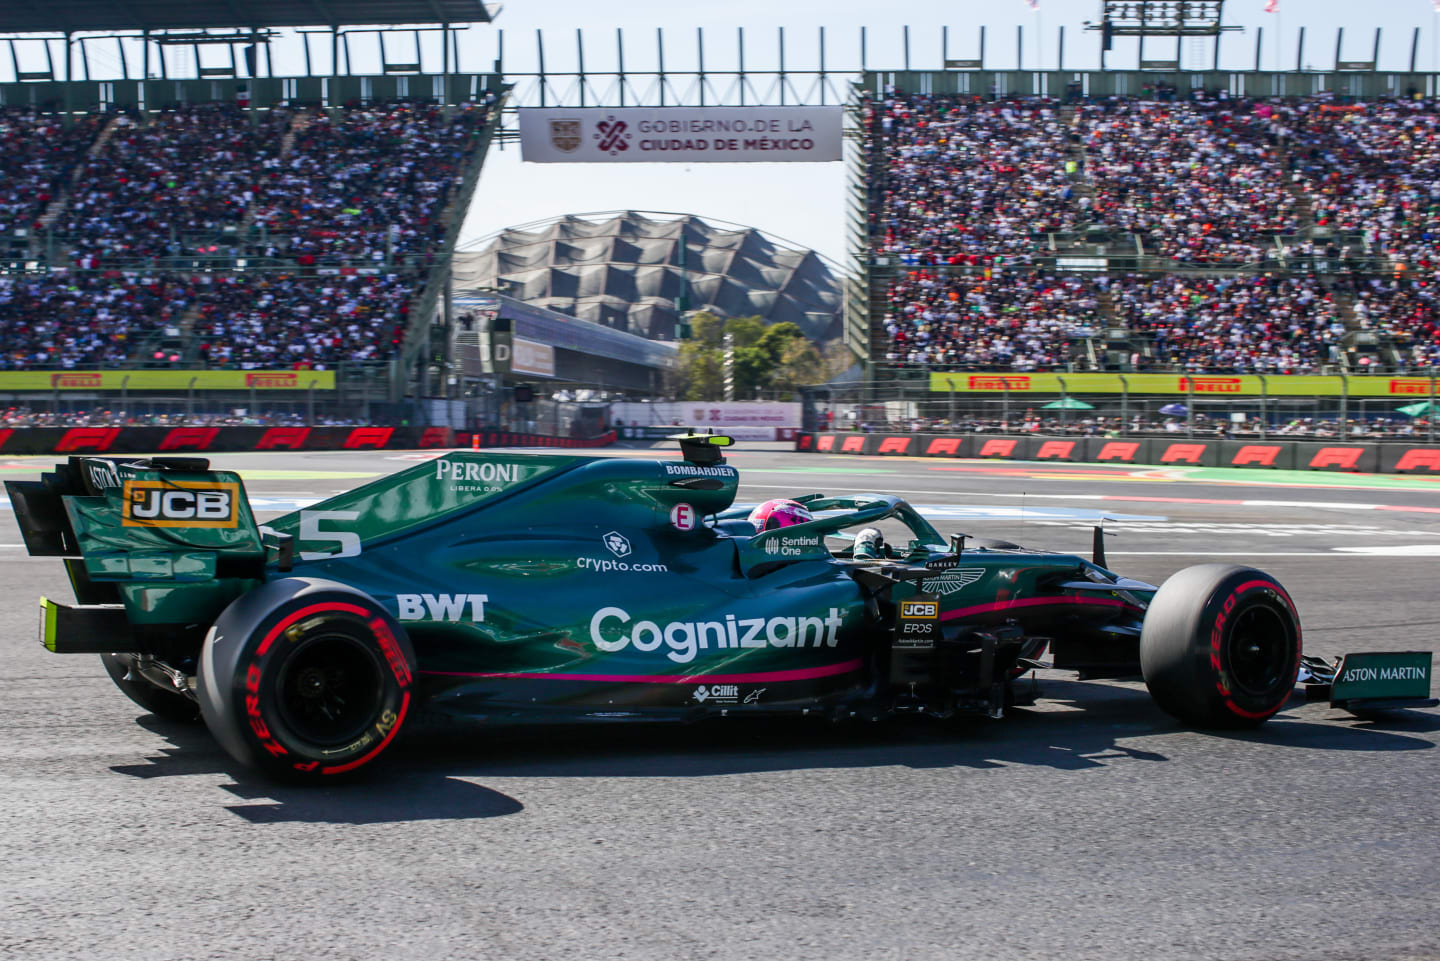 MEXICO CITY, MEXICO - NOVEMBER 06: Sebastian Vettel of Aston Martin and Germany during qualifying